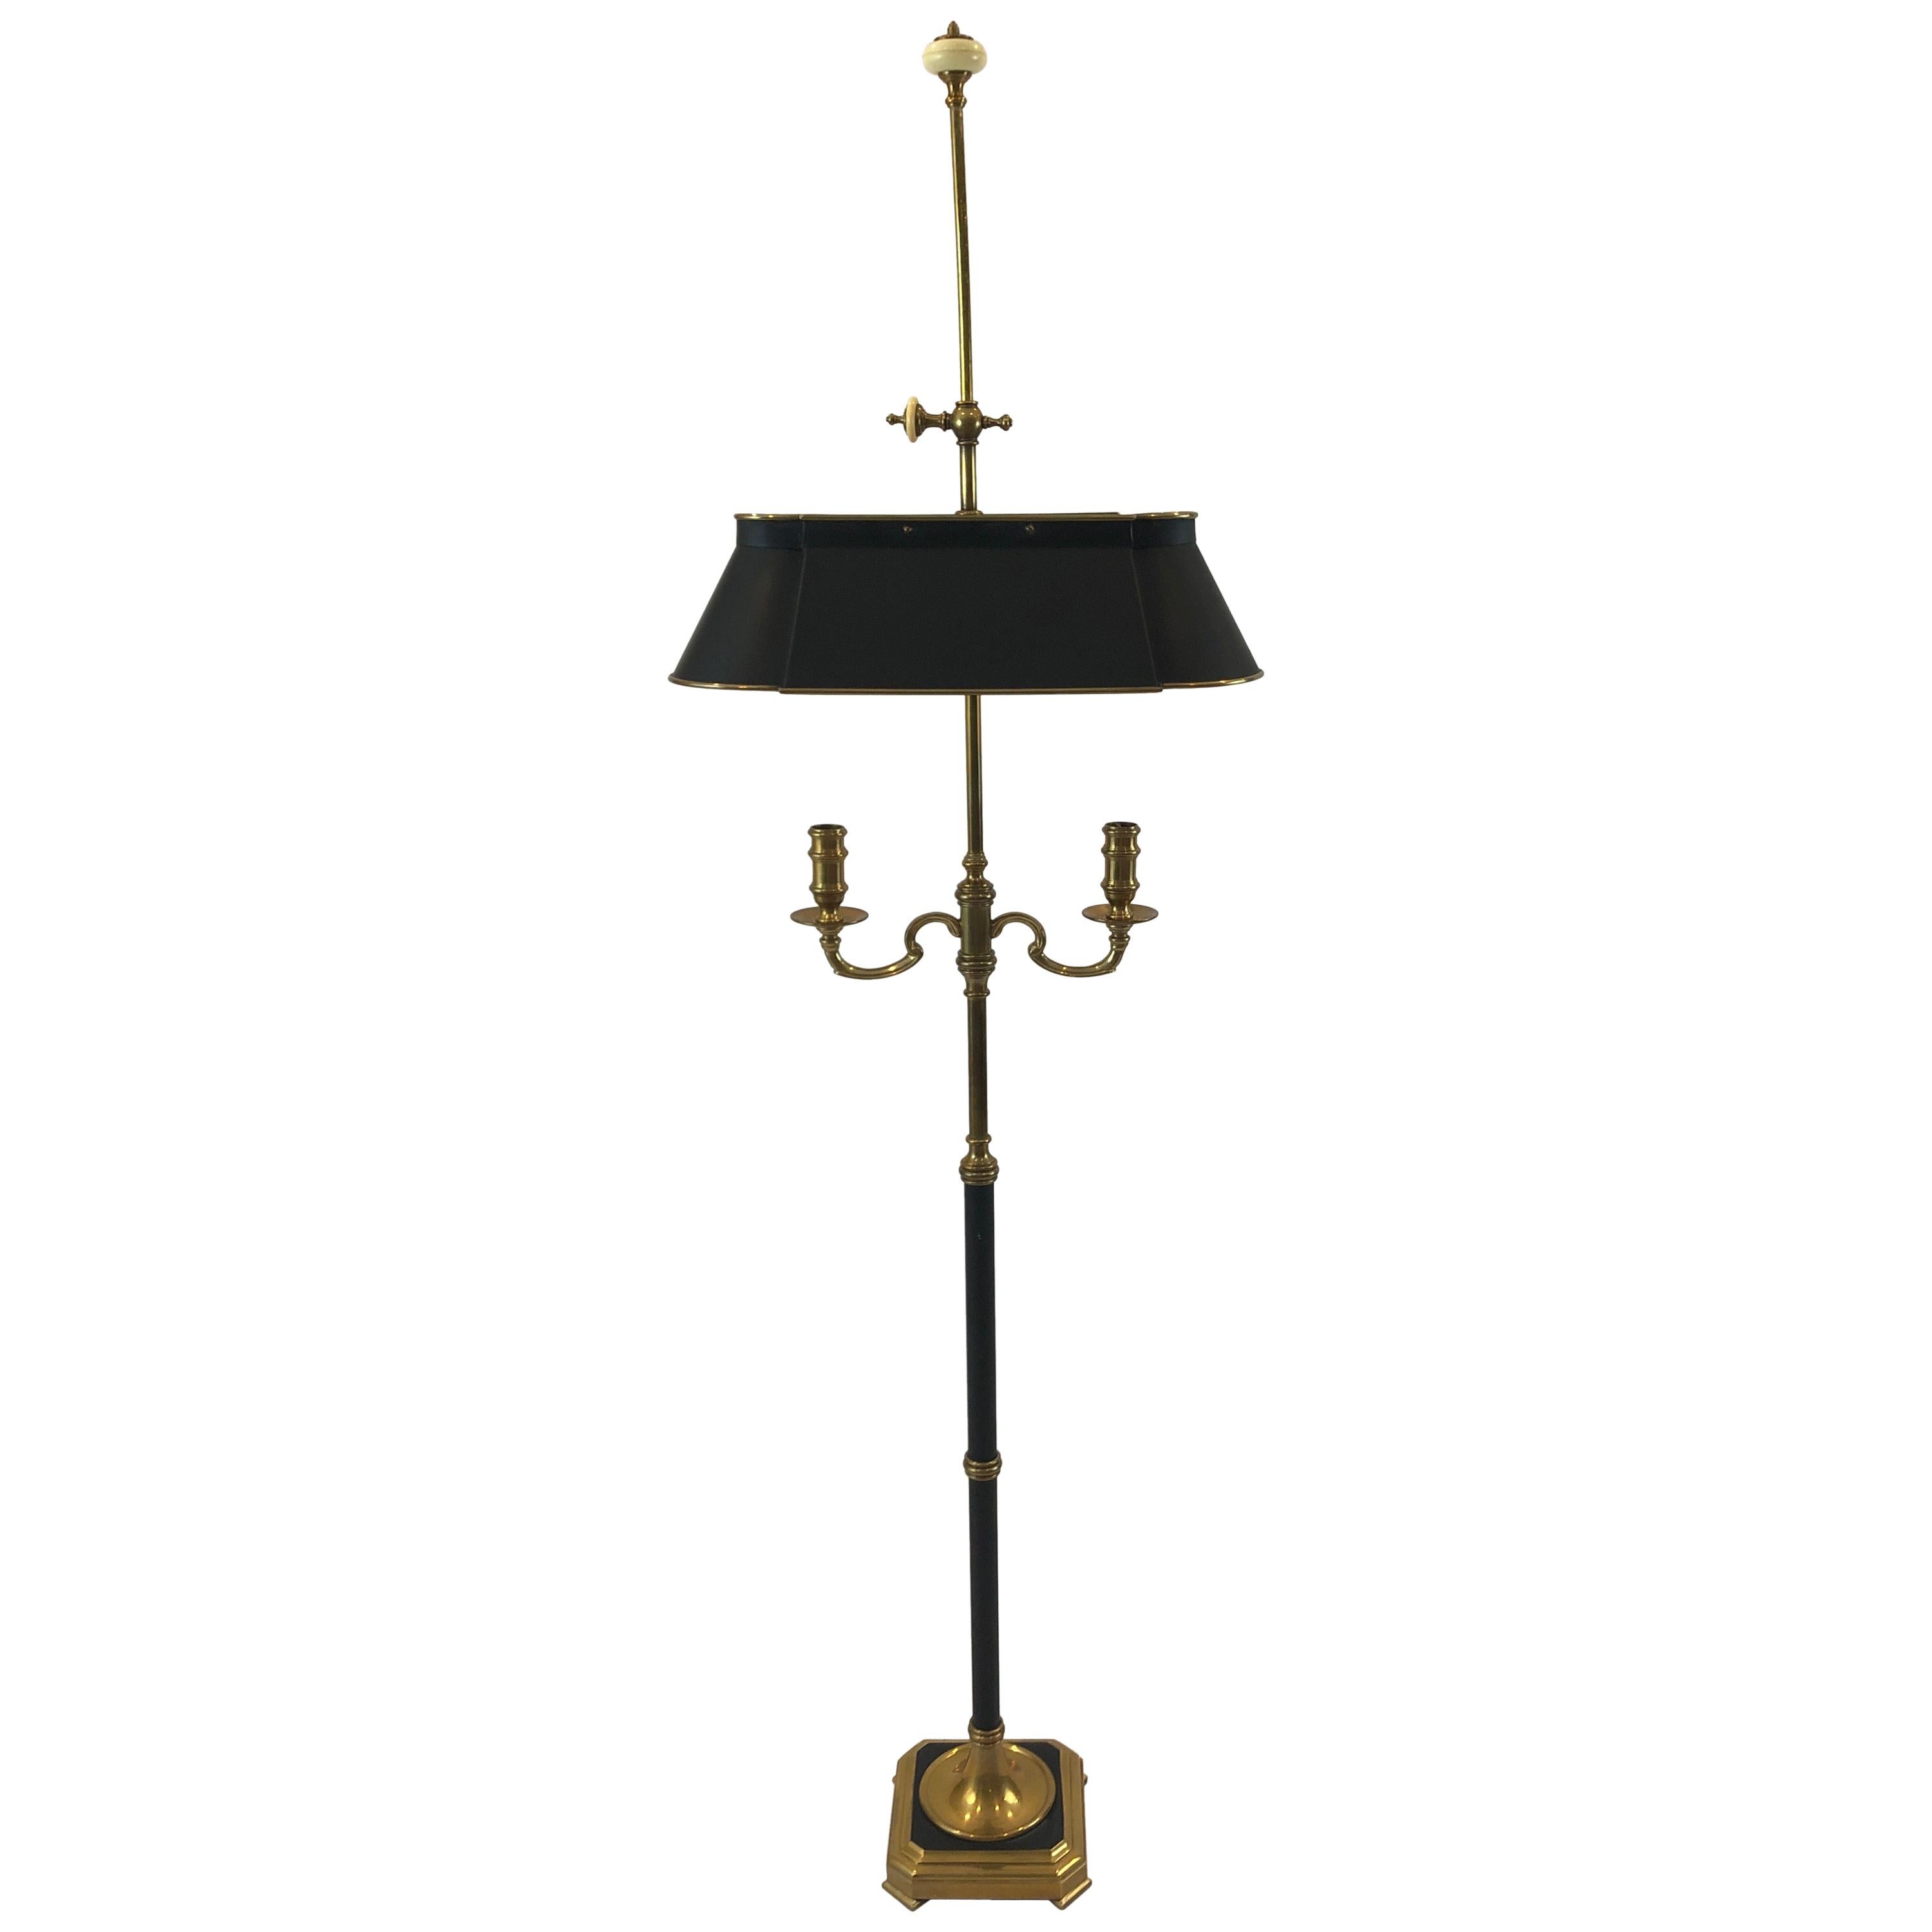 Classic Brass Chapman Floor Lamp with Black Metal Shade